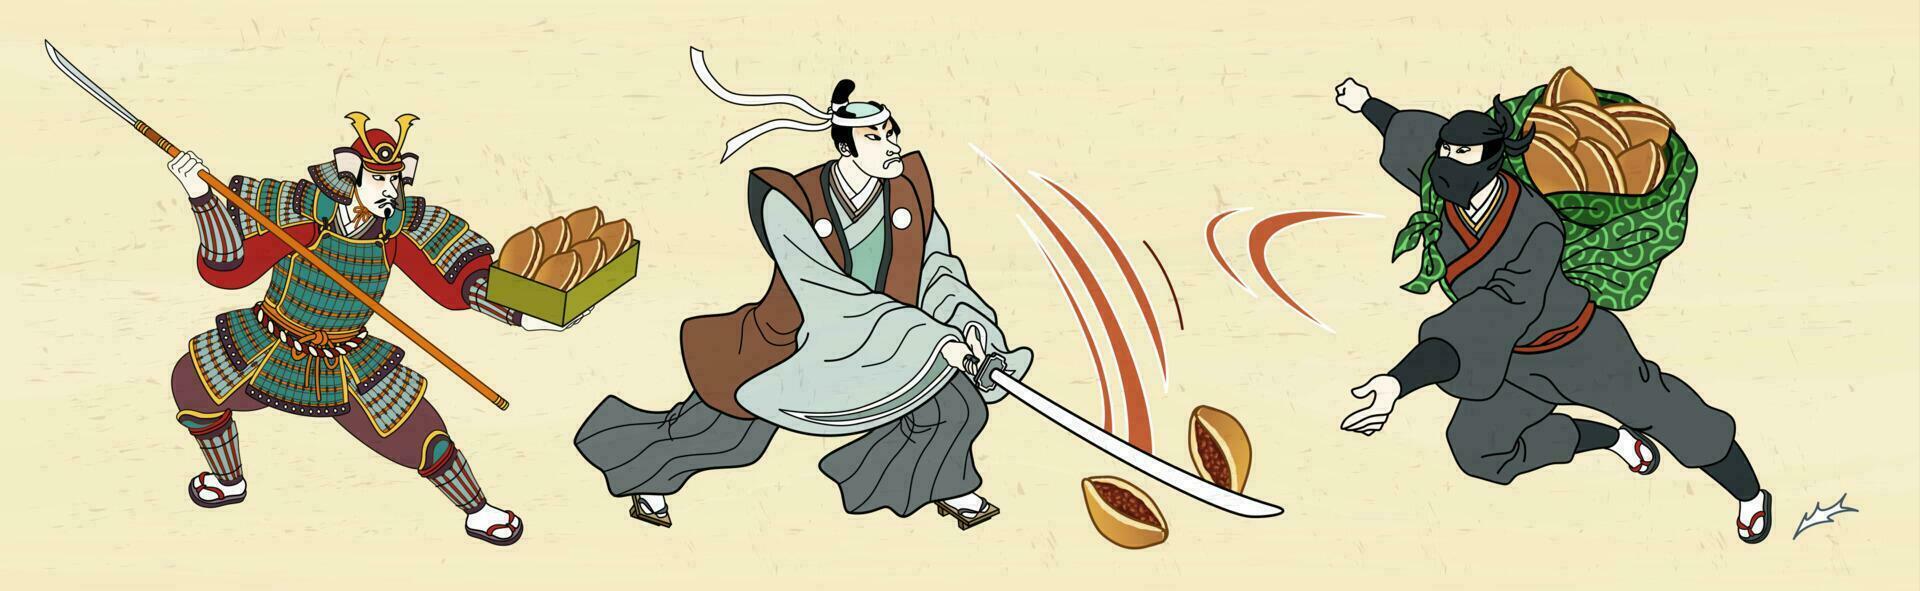 Japanese general and ninja fighting with dorayaki in ukiyo-e style vector